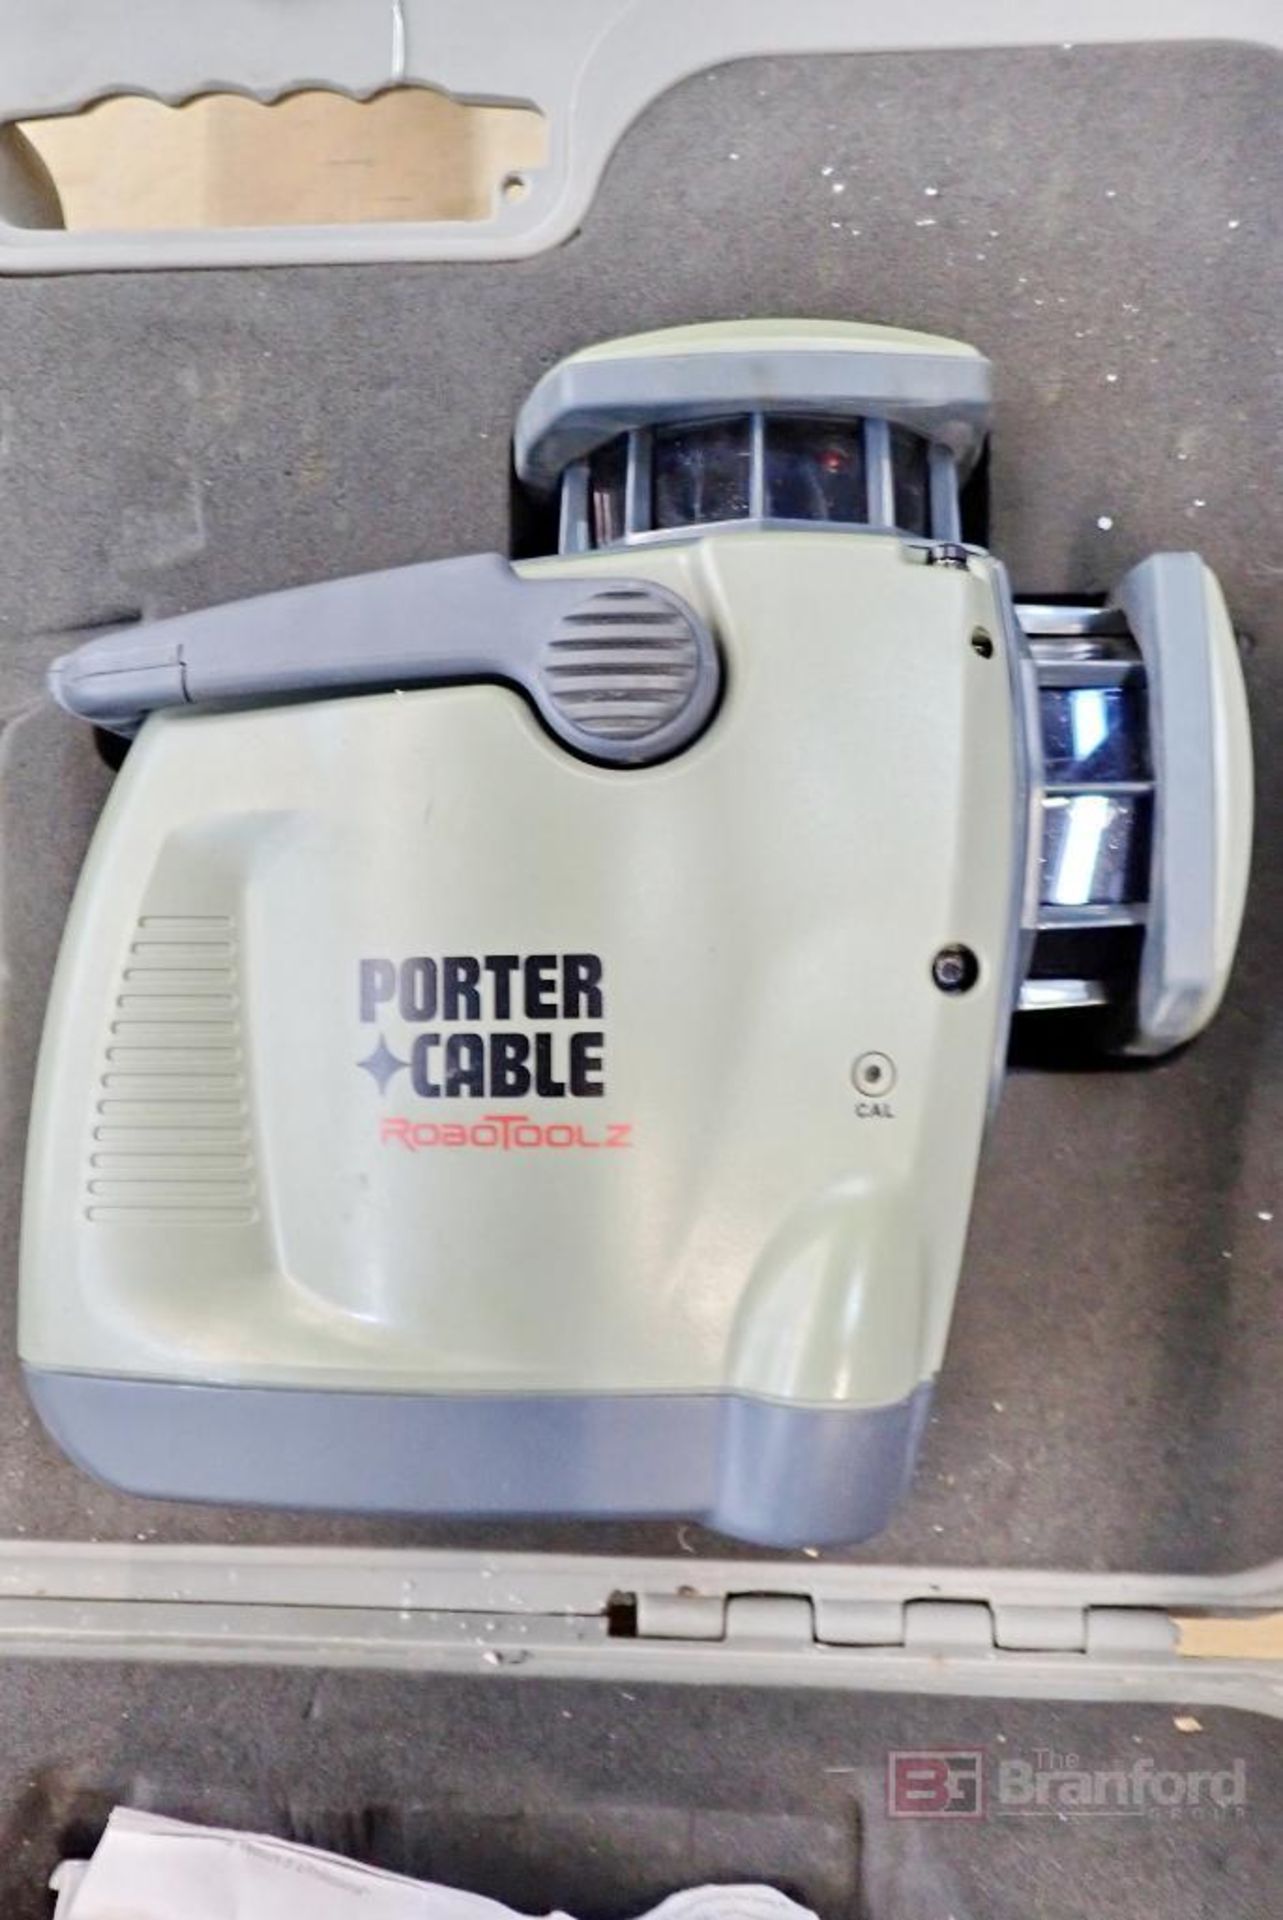 Porter Cable RT-7690-2 RoboToolz Laser Level - Image 2 of 4